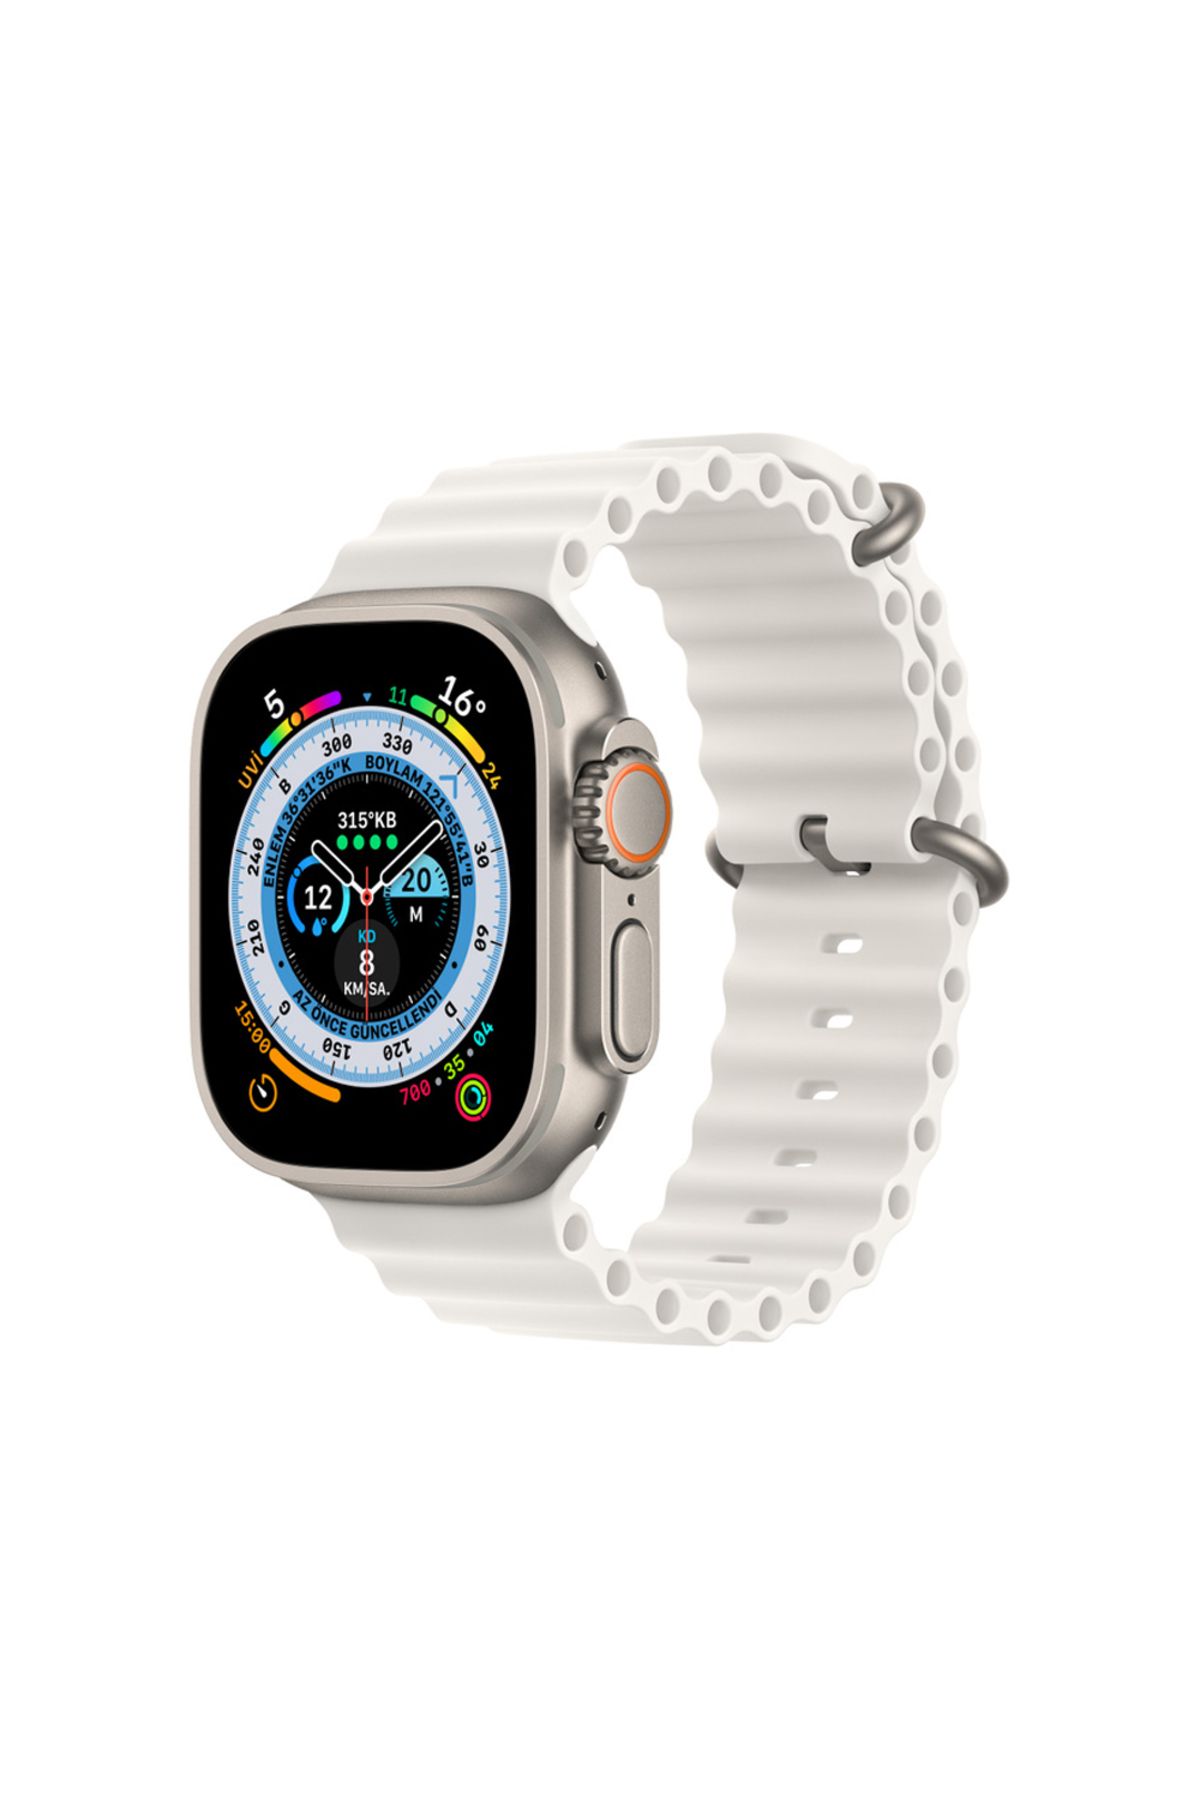 Winex Mobile Winex Watch G900 Pro 2024 Android Ios Harmonyos Uyumlu Akıllı Saat Beyaz